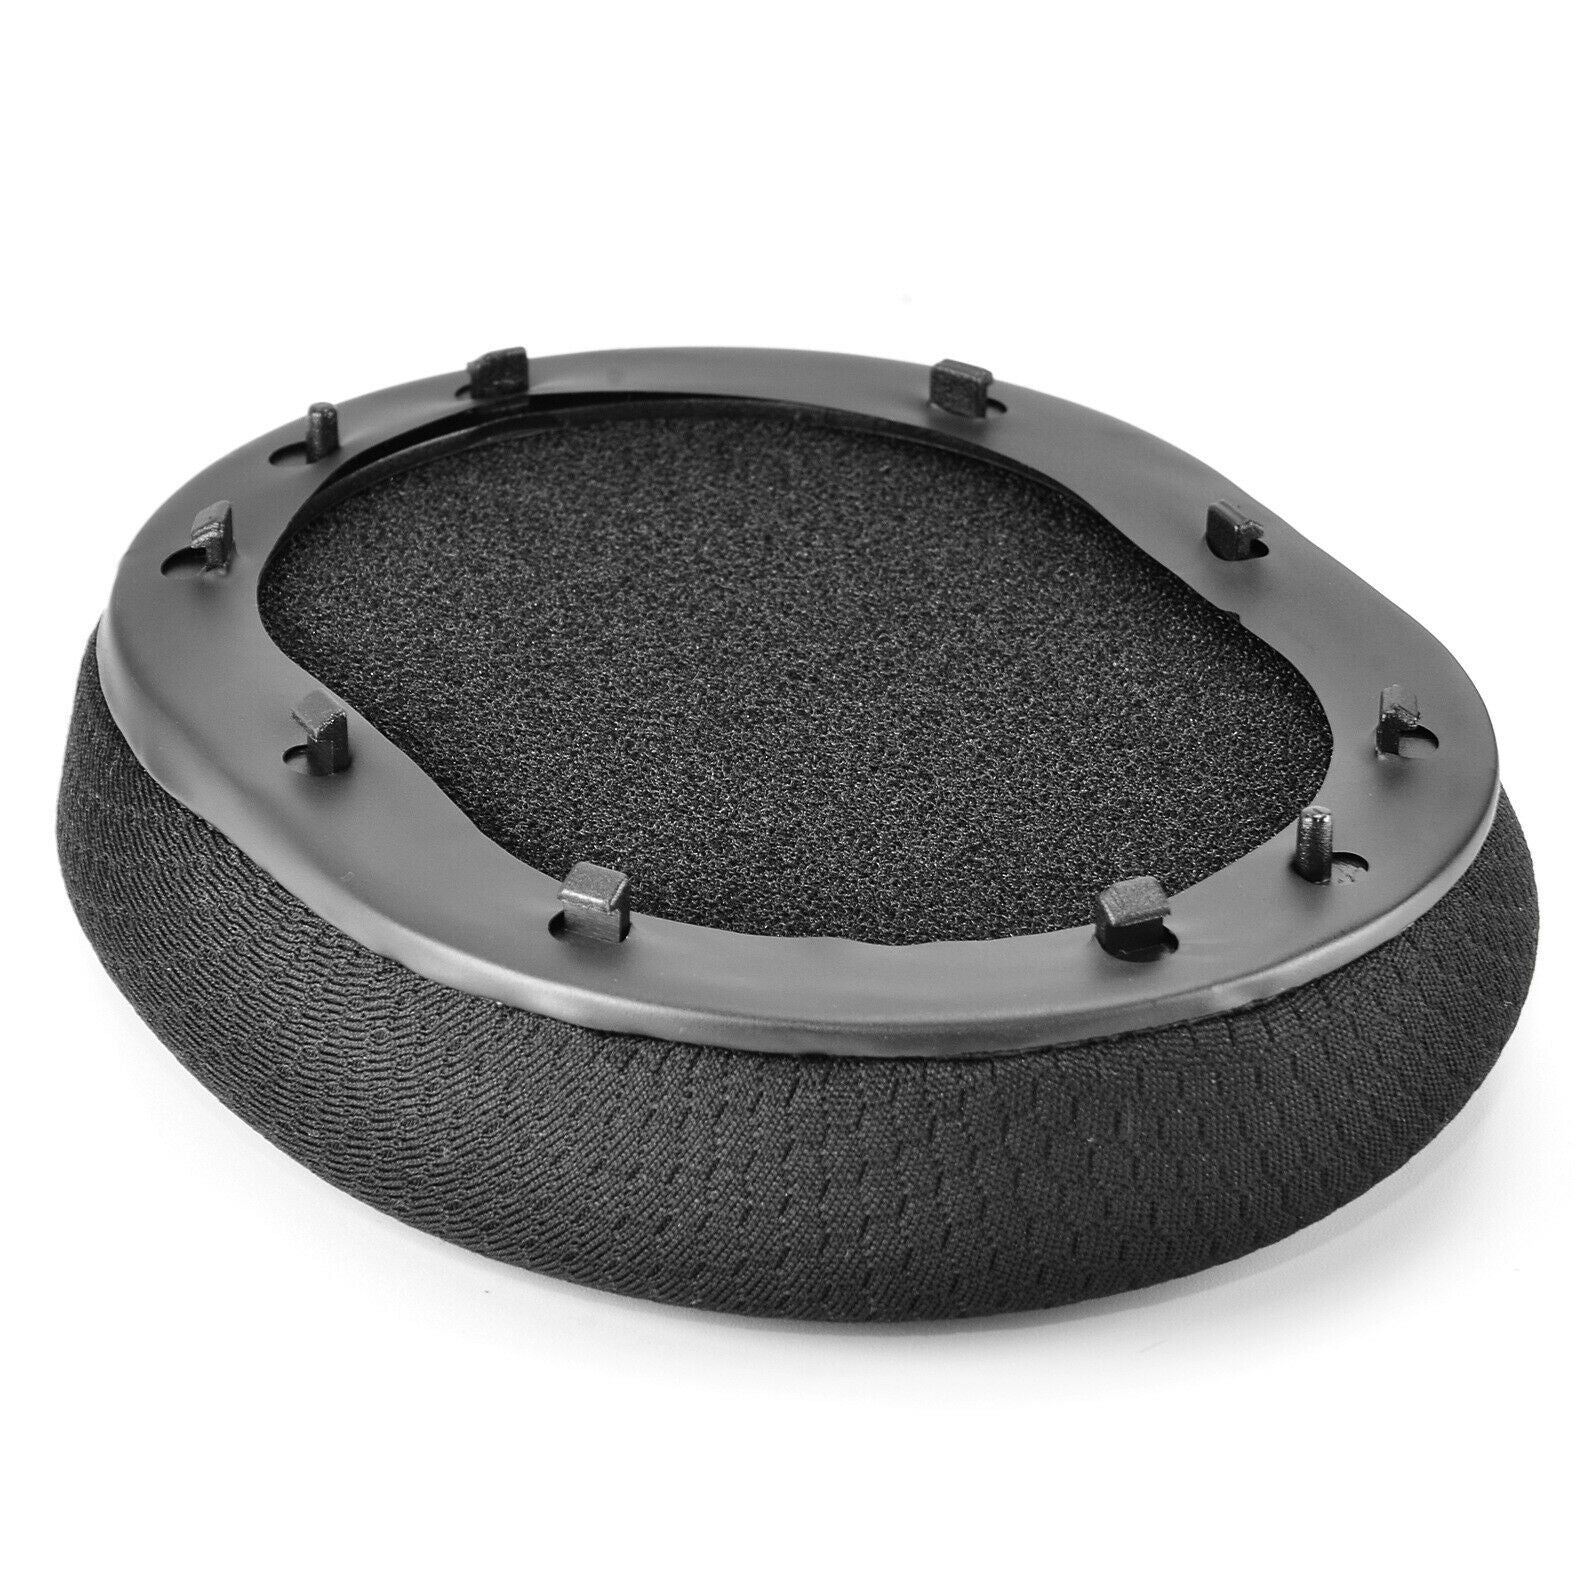 Replacement New Cushion Ear Pads for Razer BlackShark V2 Pro Gaming Headset Part